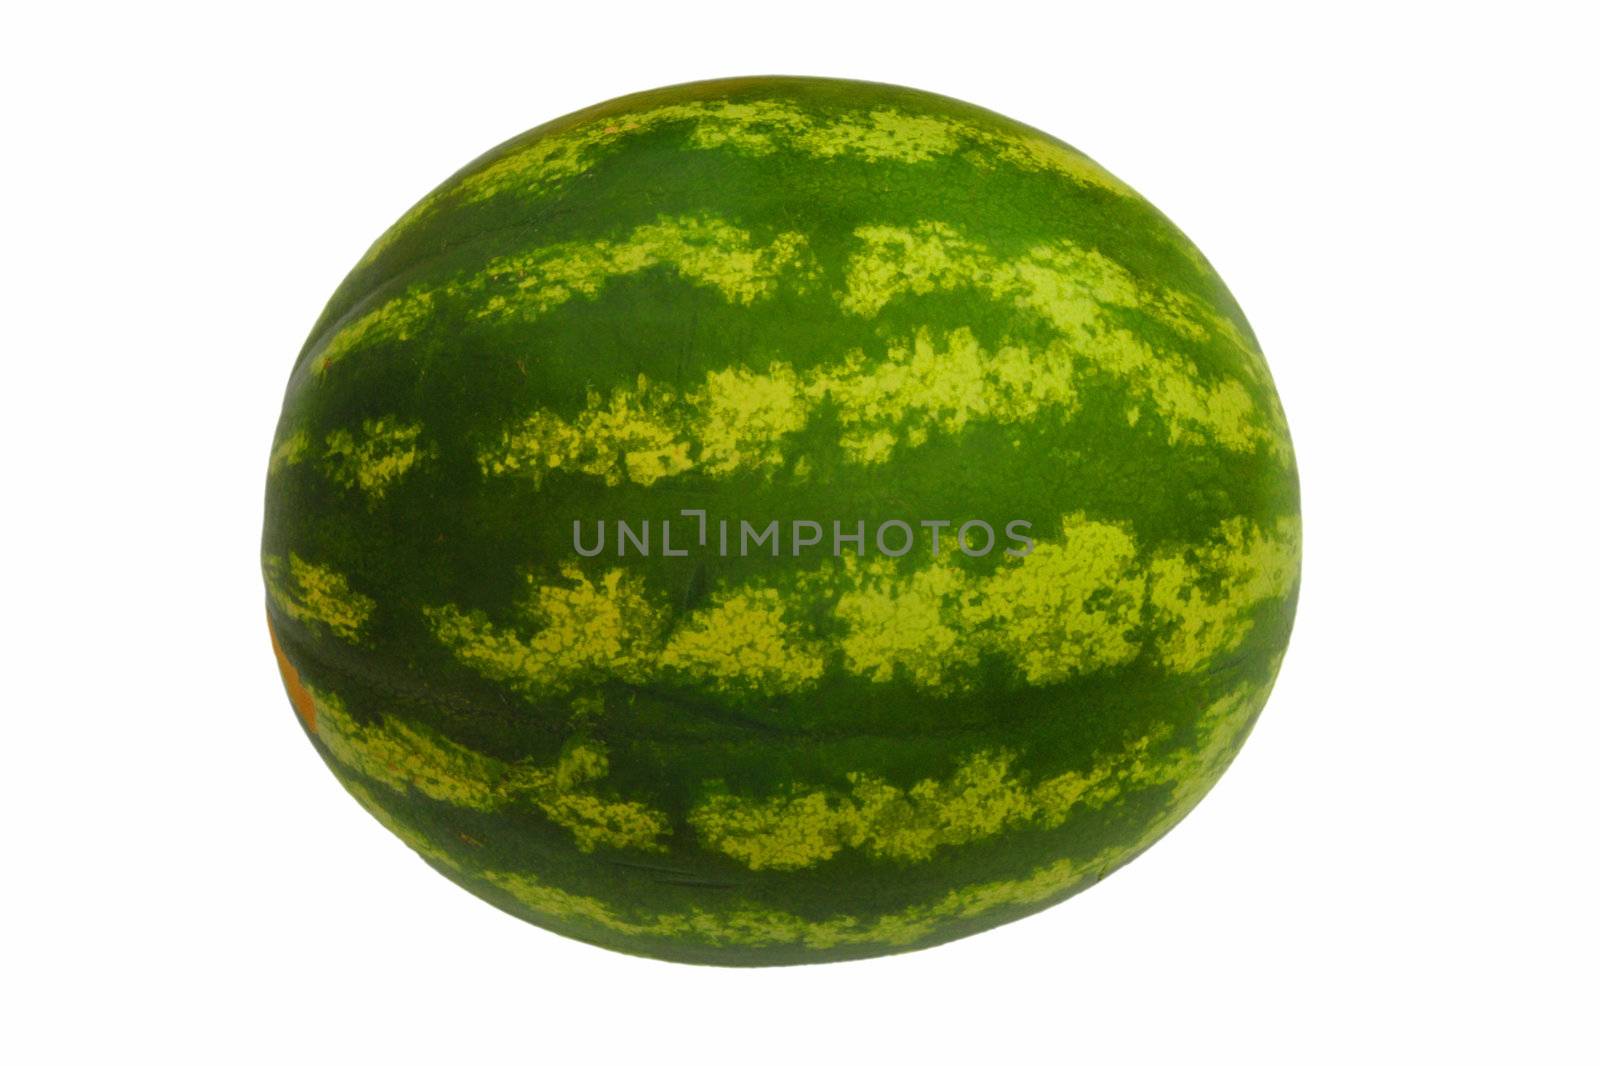 Watermelon by Yaurinko